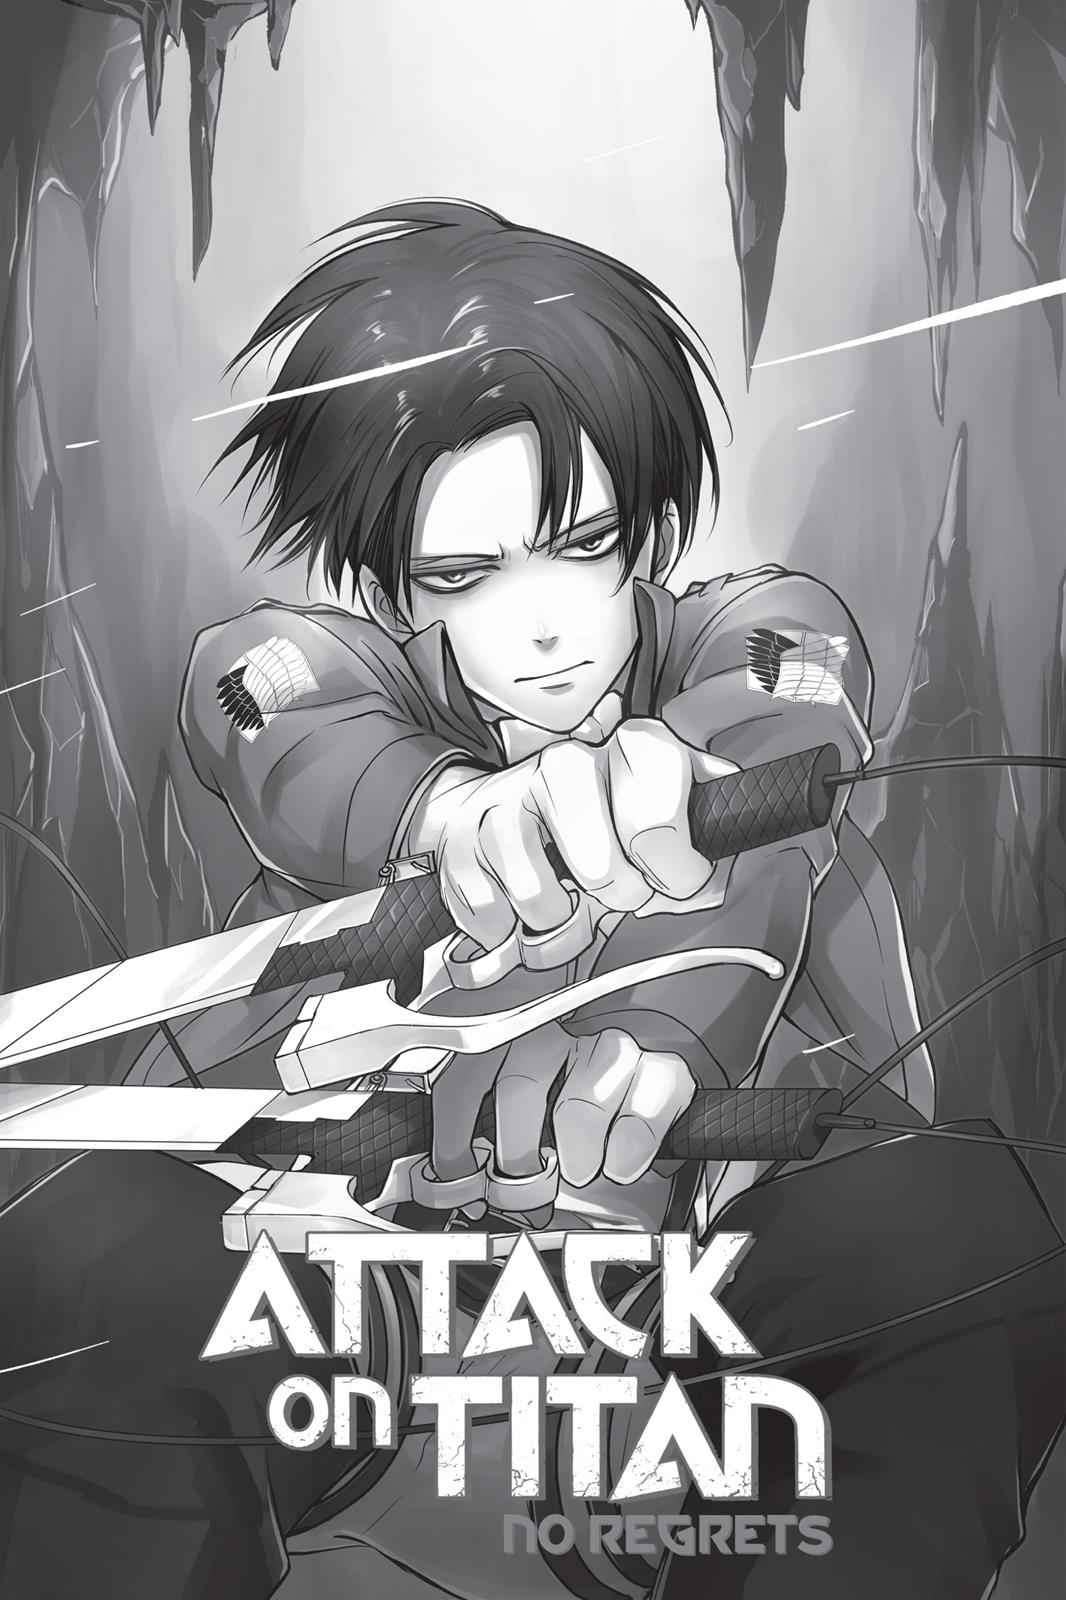 Attack On Titan, Chapter 1 - Attack On Titan Manga Online